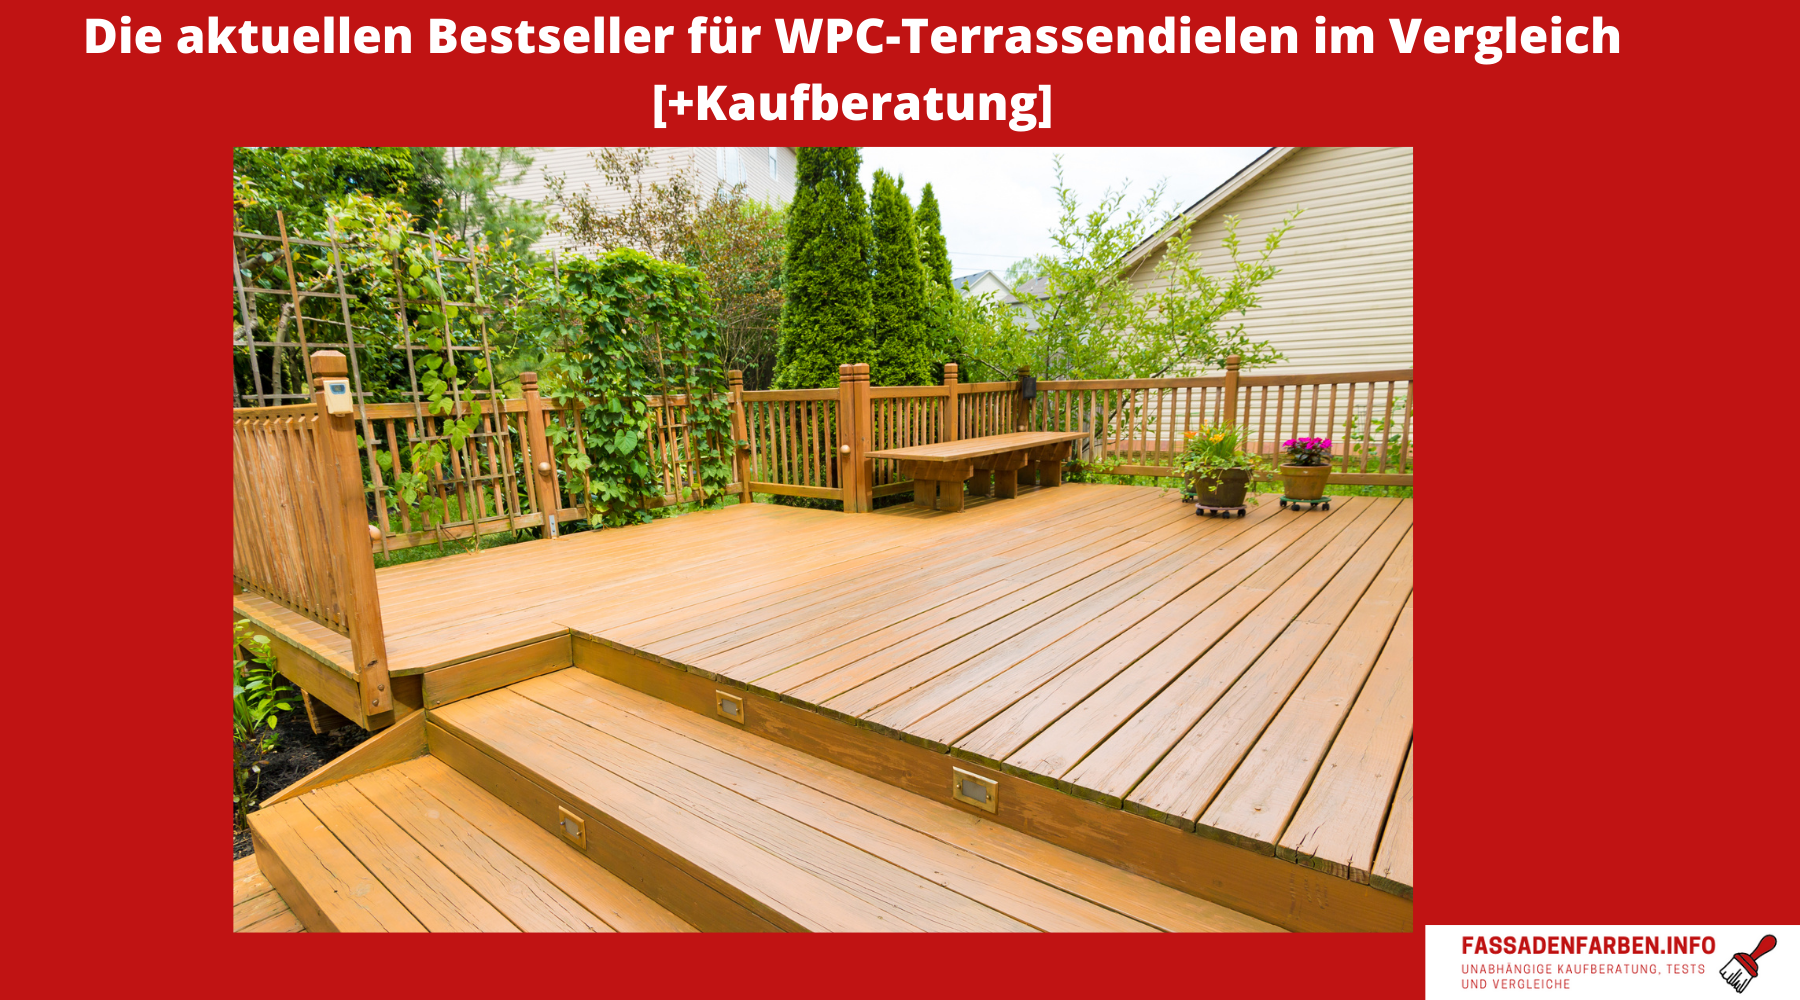 WPC Terrassendielen Set 25 qm Komplett Bausatz Diele Dielen Holz Terrassendiele 